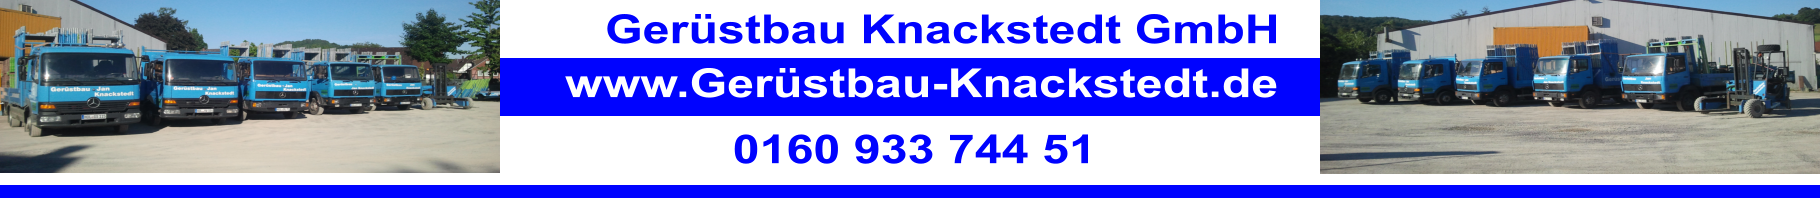 Gerstbau Knackstedt GmbH www.Gerstbau-Knackstedt.de 0160 933 744 51